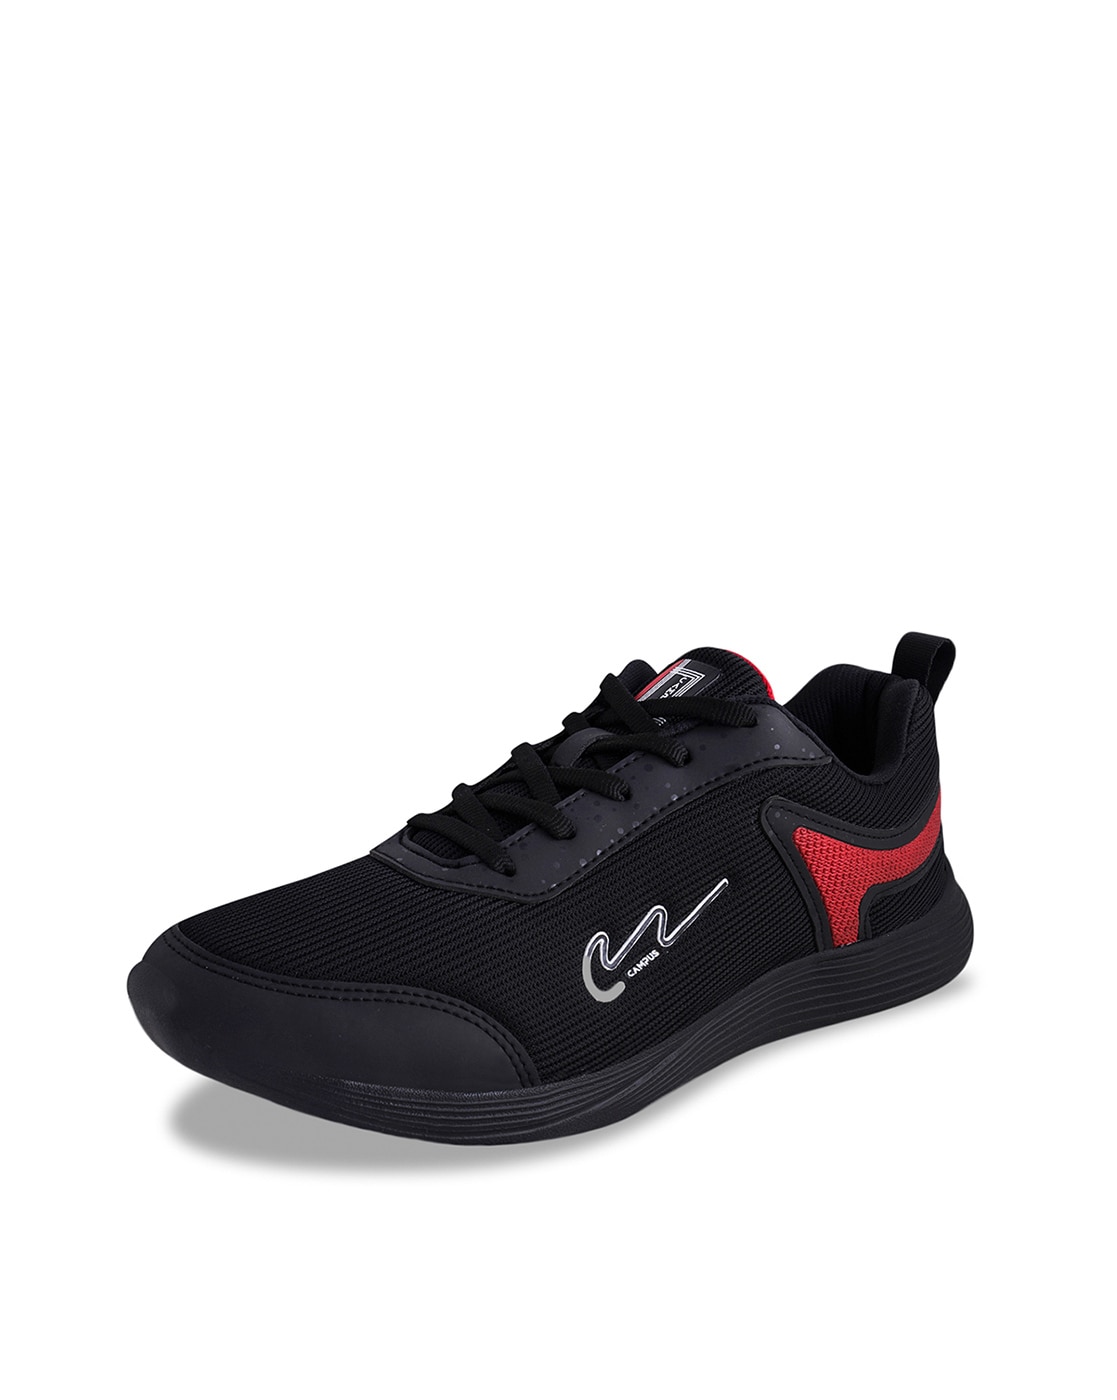 Buy Shoe Plaza Punjab -G&D Flexo 2 Boys Shoes (Size 10) at Amazon.in